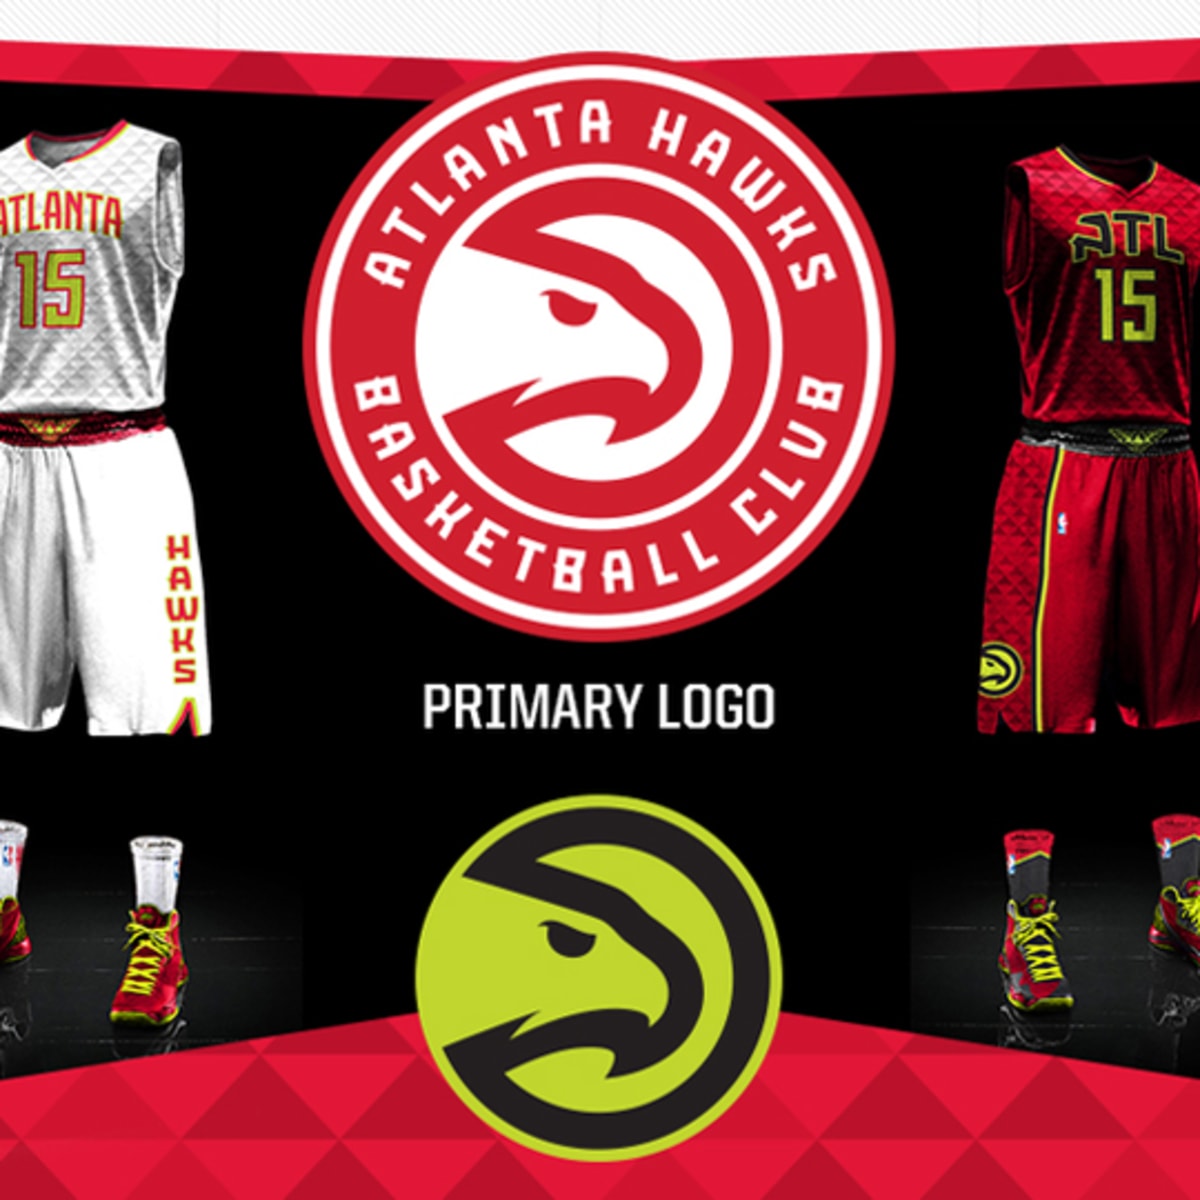 Atlanta Hawks players helped design new uniform scheme - Sports Illustrated